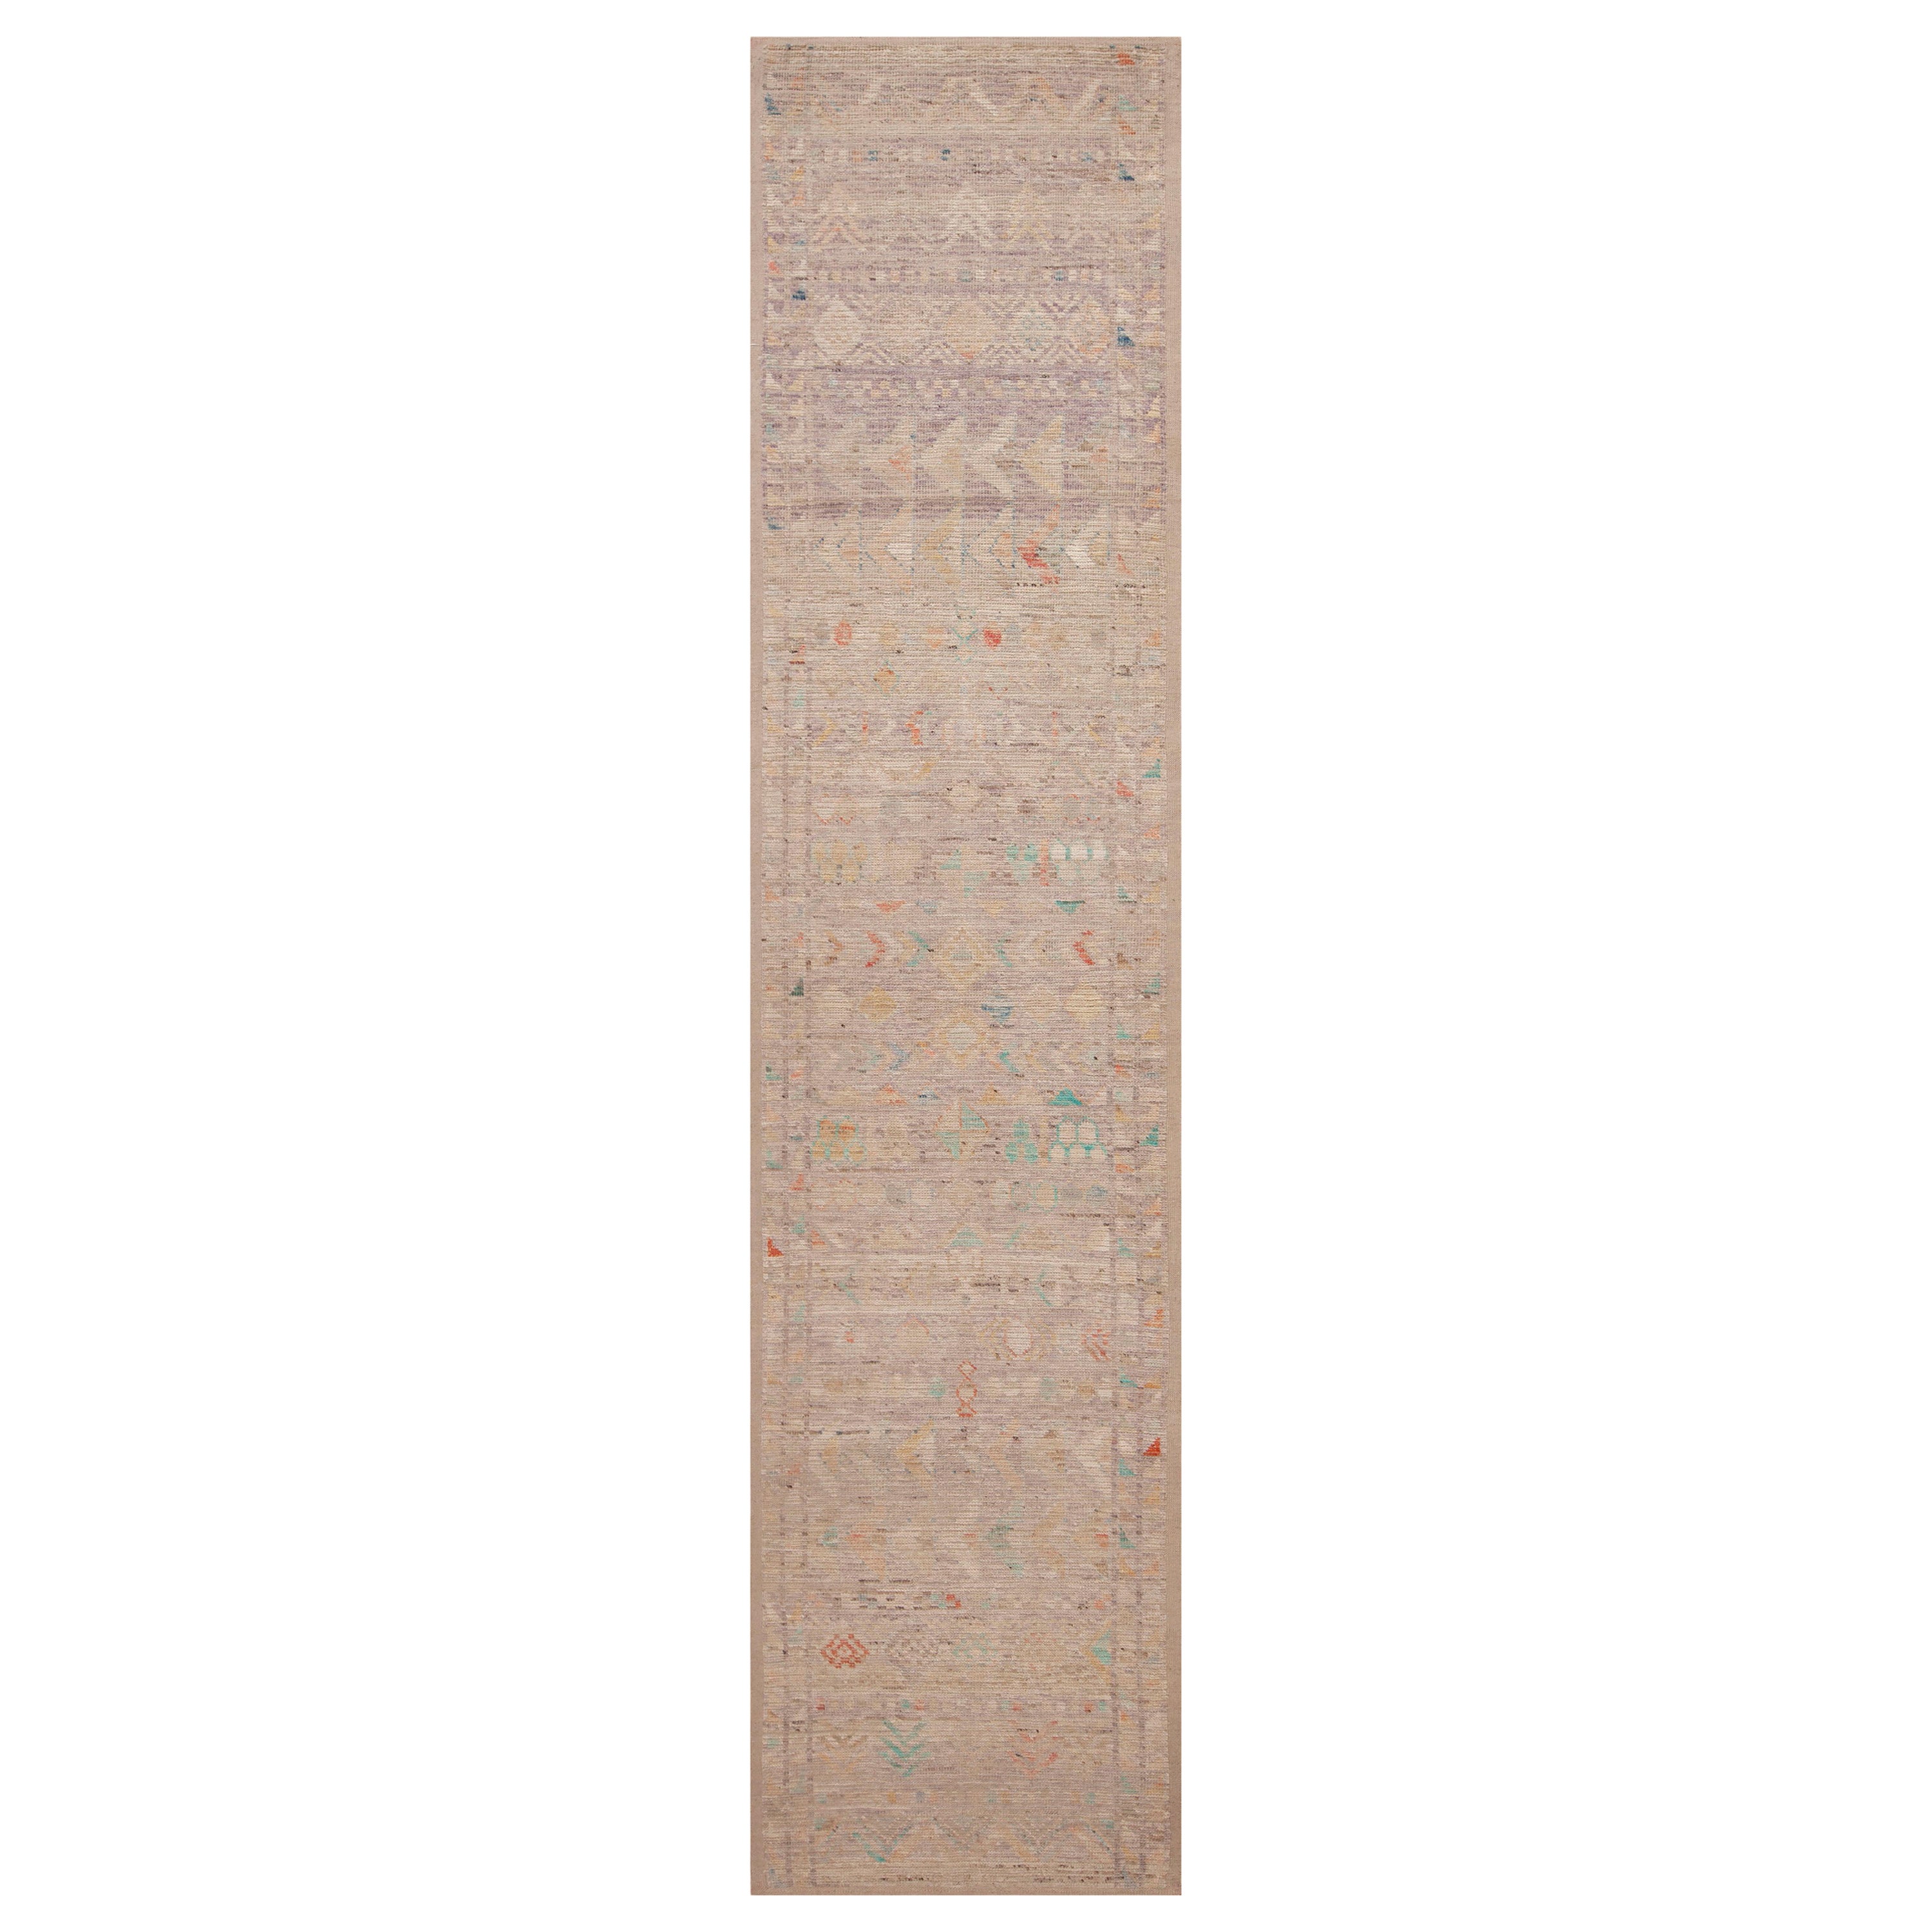 Nazmiyal Collection Tribal Geometric Pastel Modern Runner Rug 3' x 13'2"